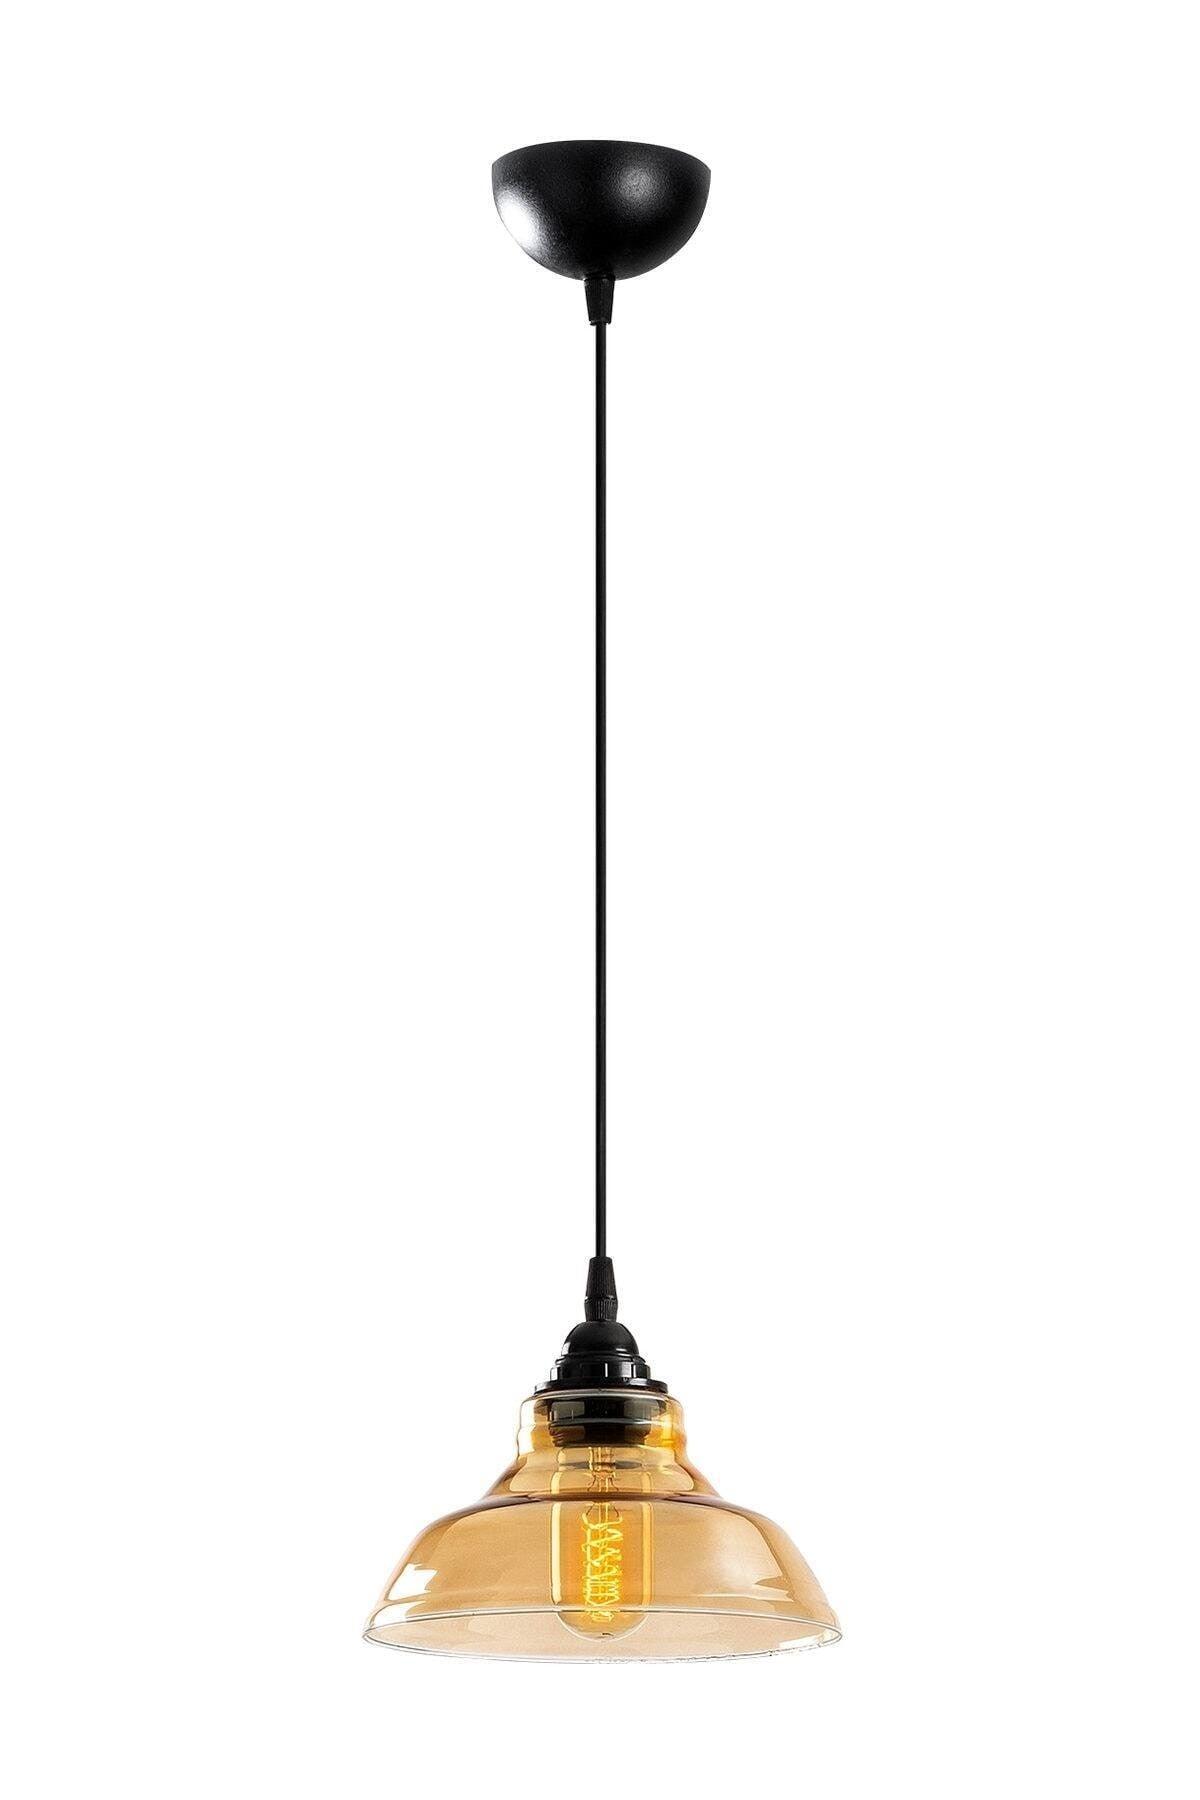 Dilberay Luxury Modern Honey Color Glass Cafe-kitchen Single Pendant Lamp Chandelier - Swordslife